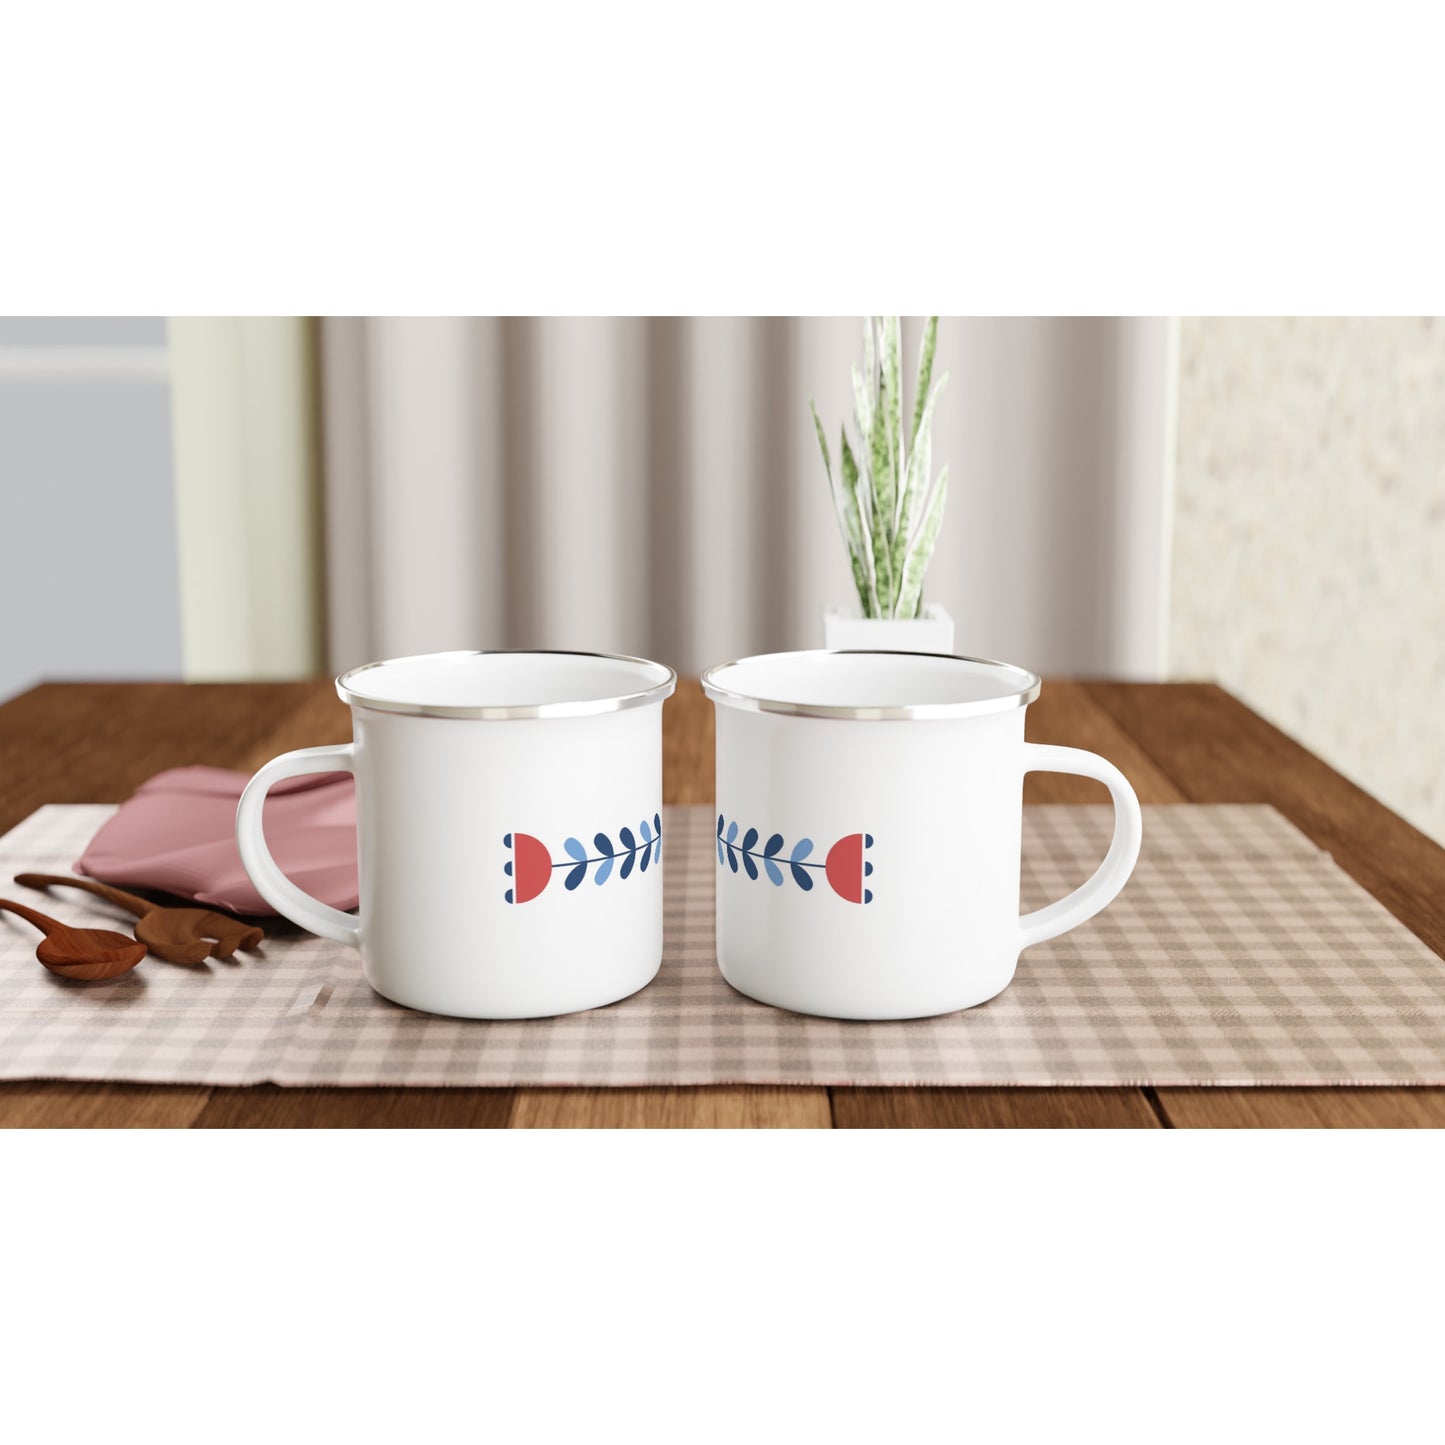 White-Red-and-Blue-Flower-Enamel-Mug-on-table